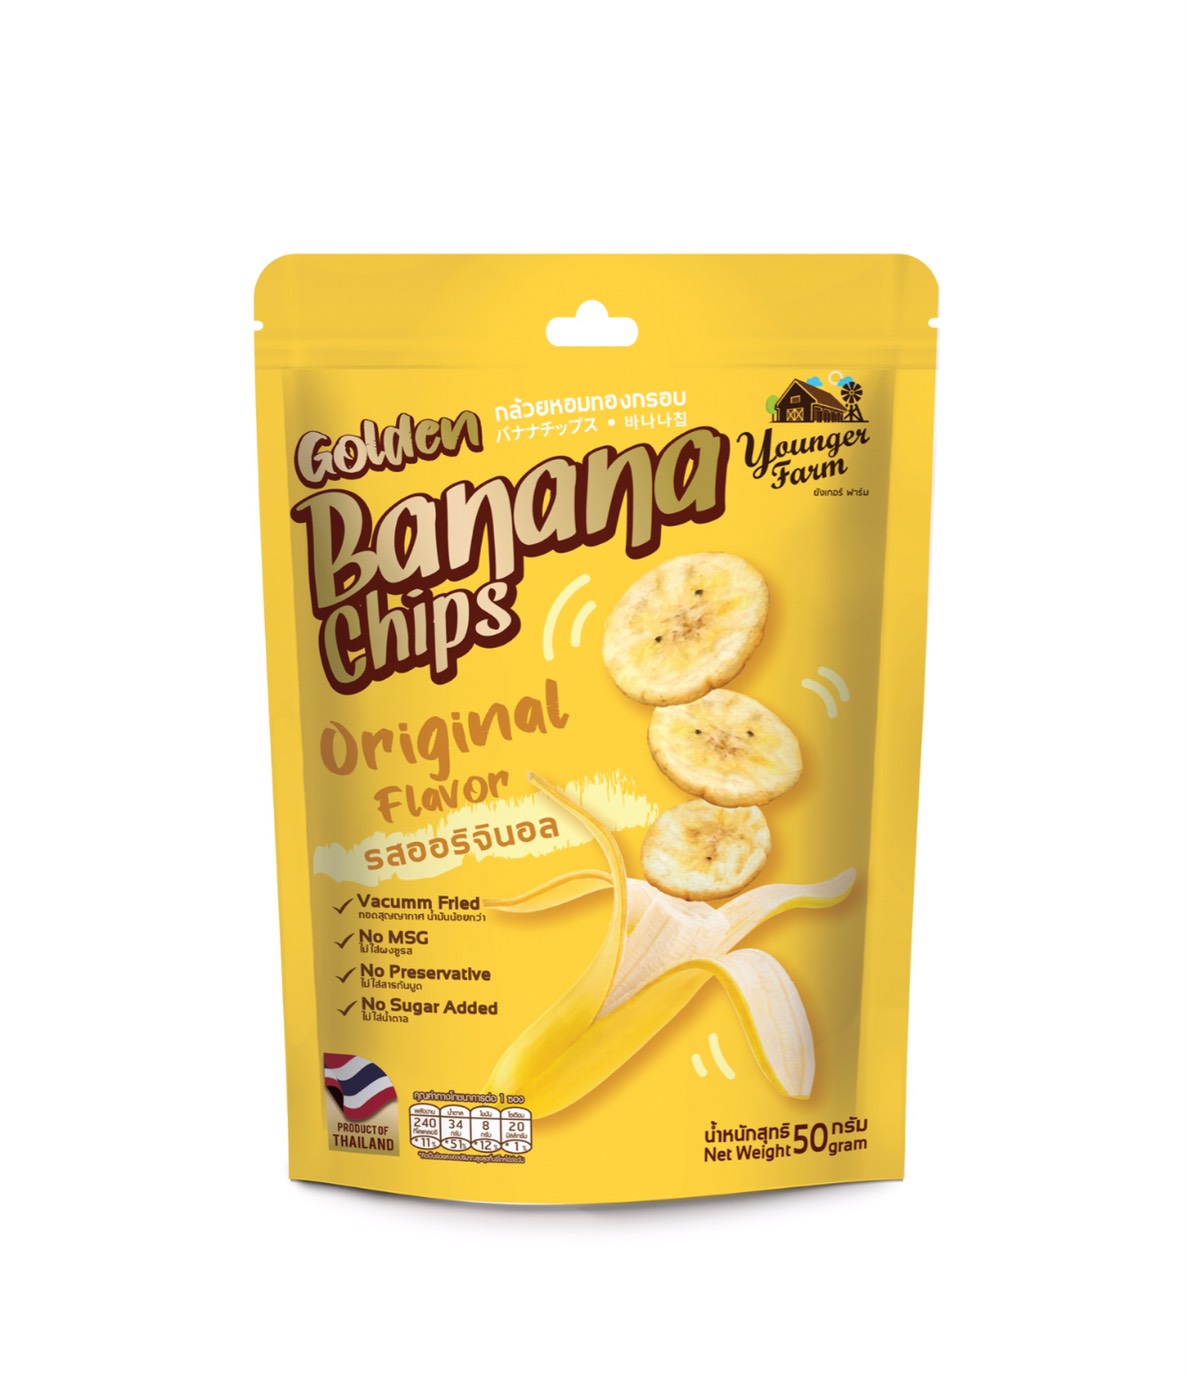 Younger Farm Golden banana Chips Original flavor 45 g